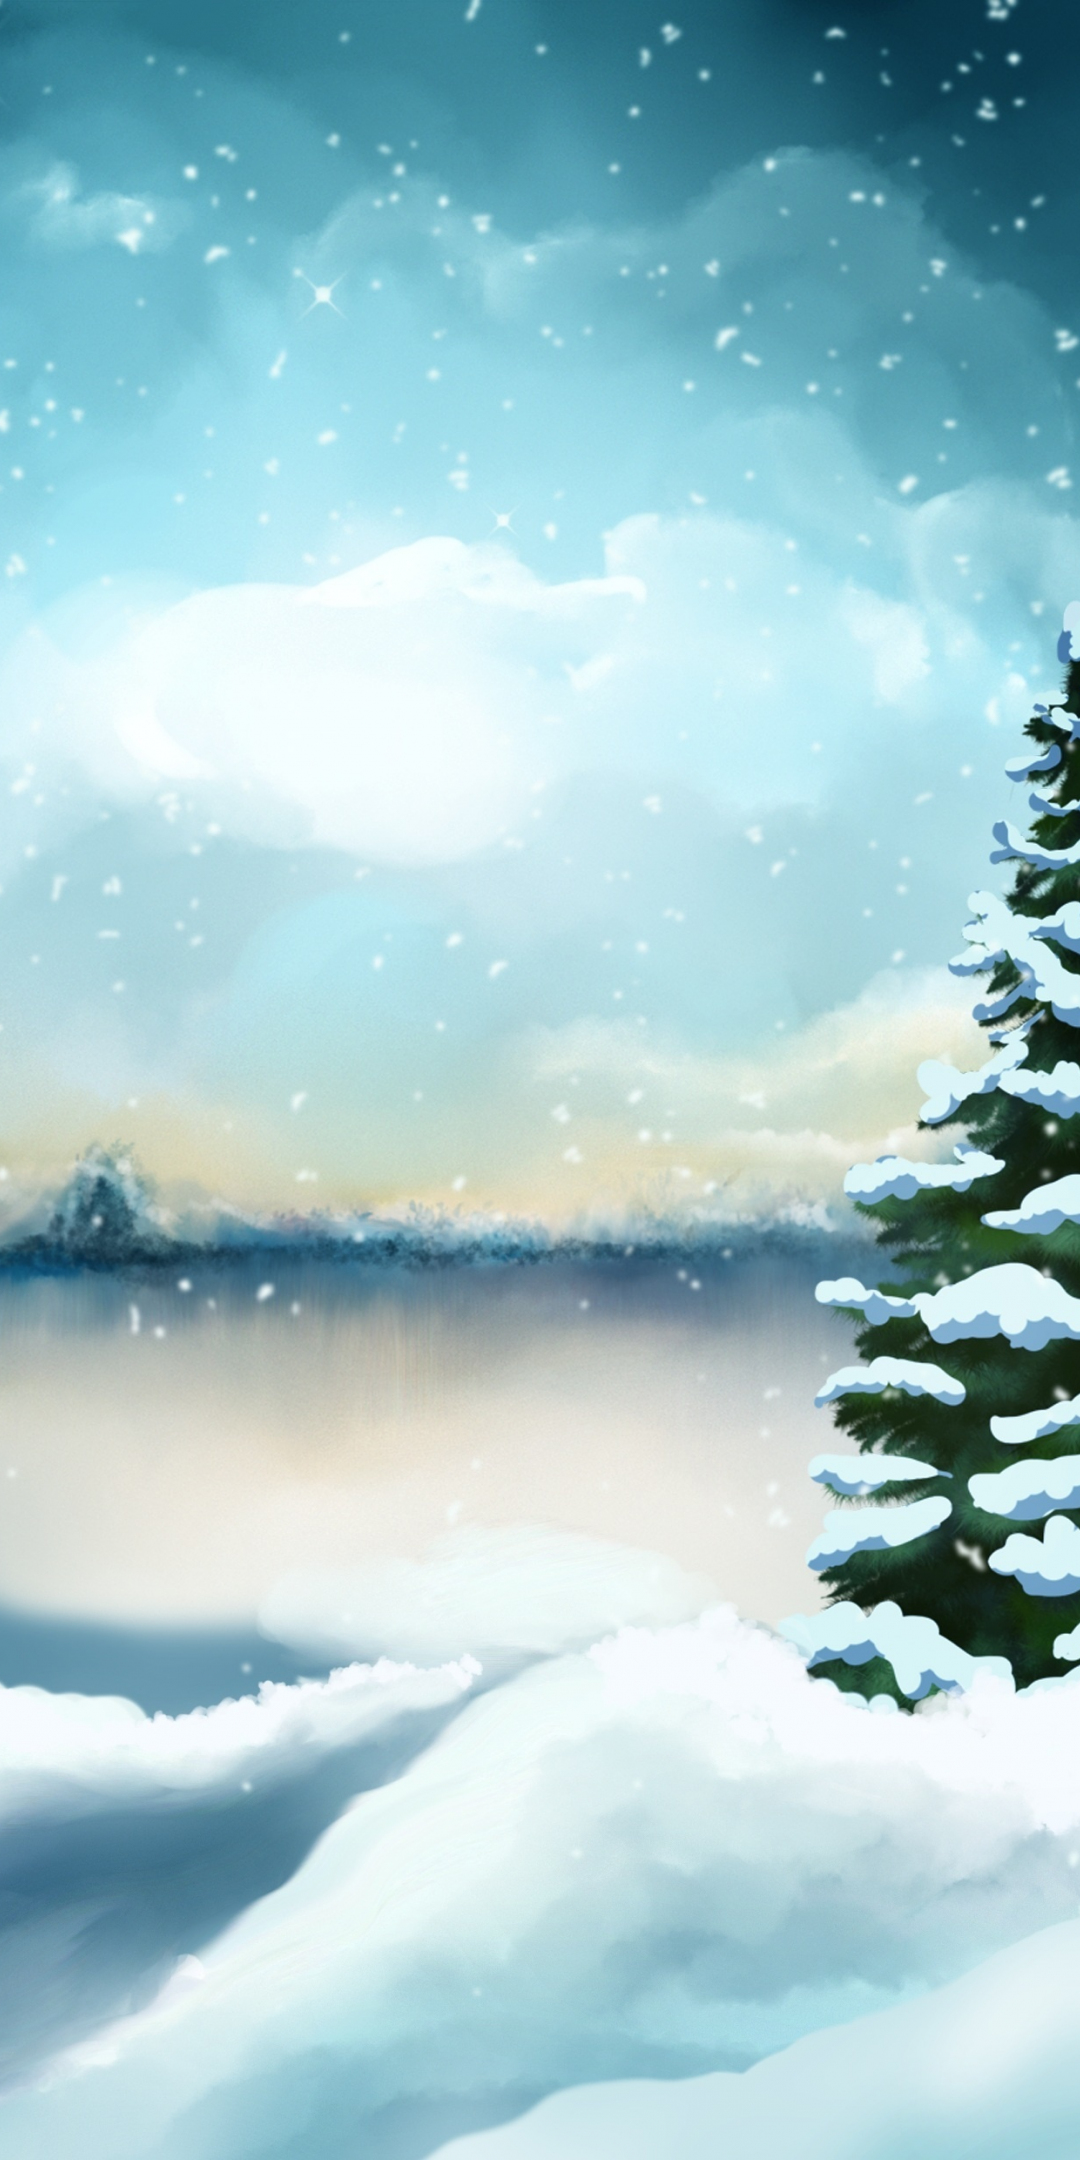 Winter, pine trees, lake, digital art, 1080x2160 wallpaper